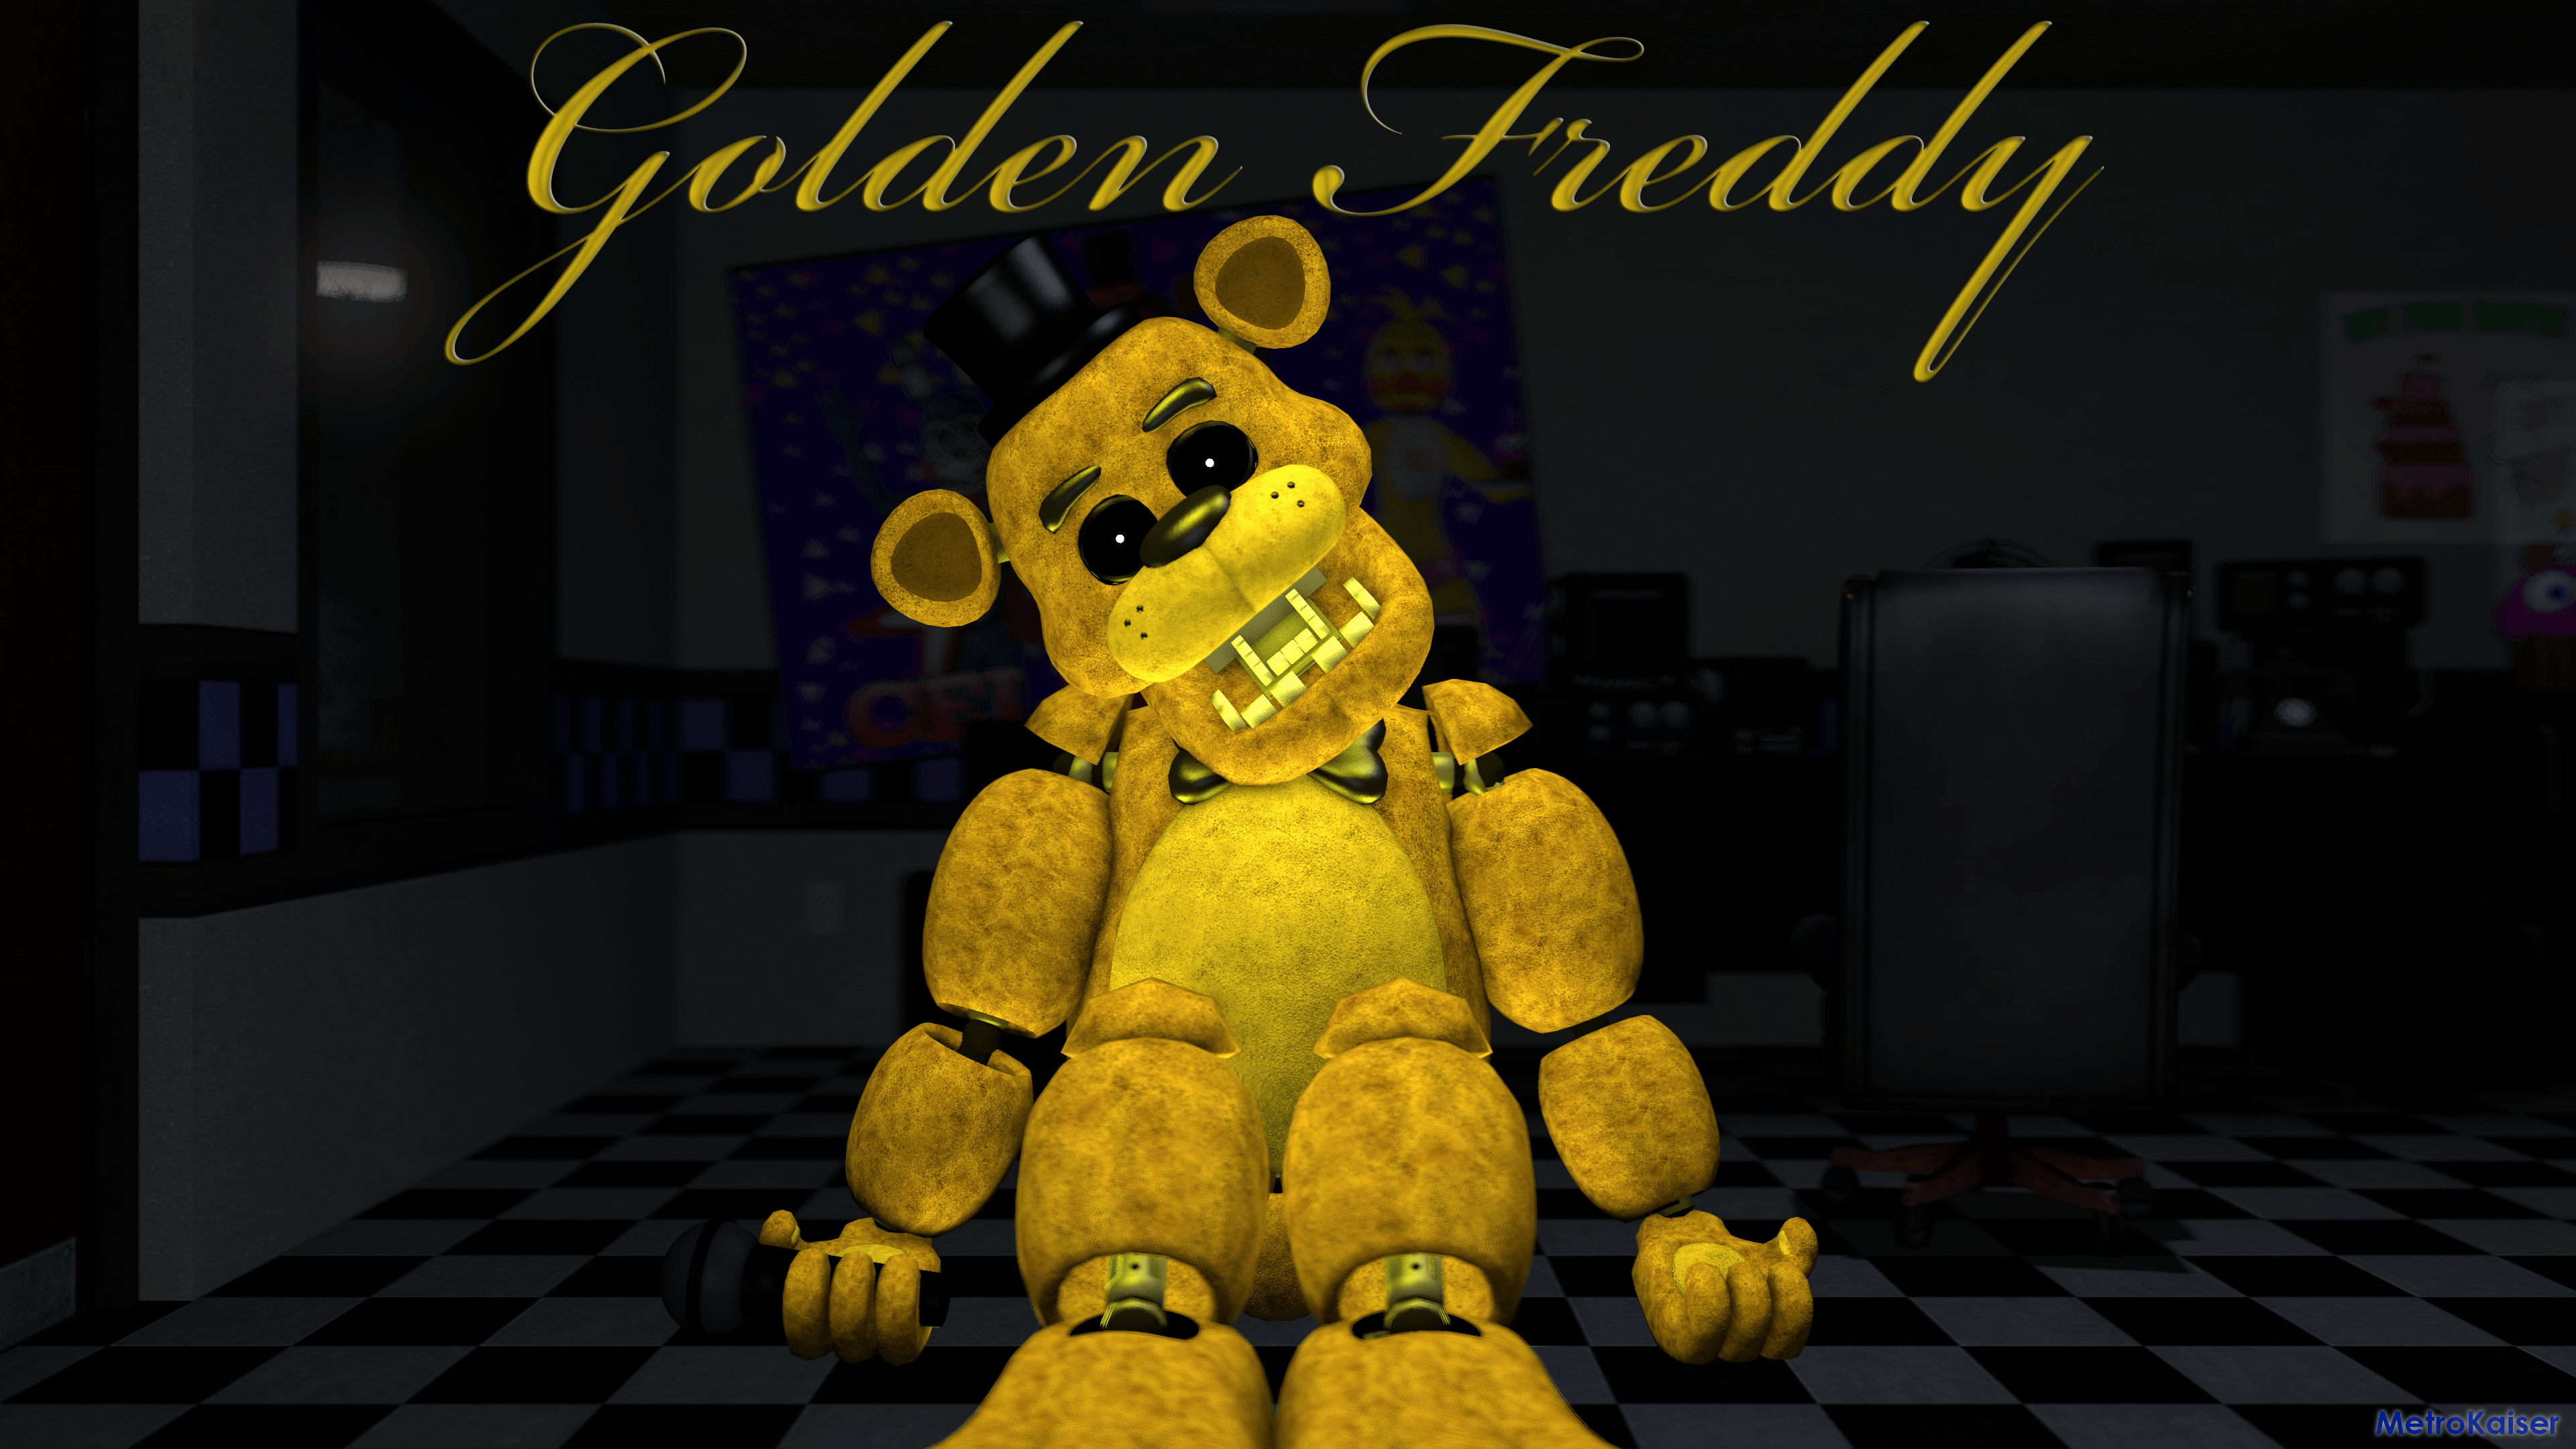 Golden Freddy Wallpapers - Wallpaper Cave